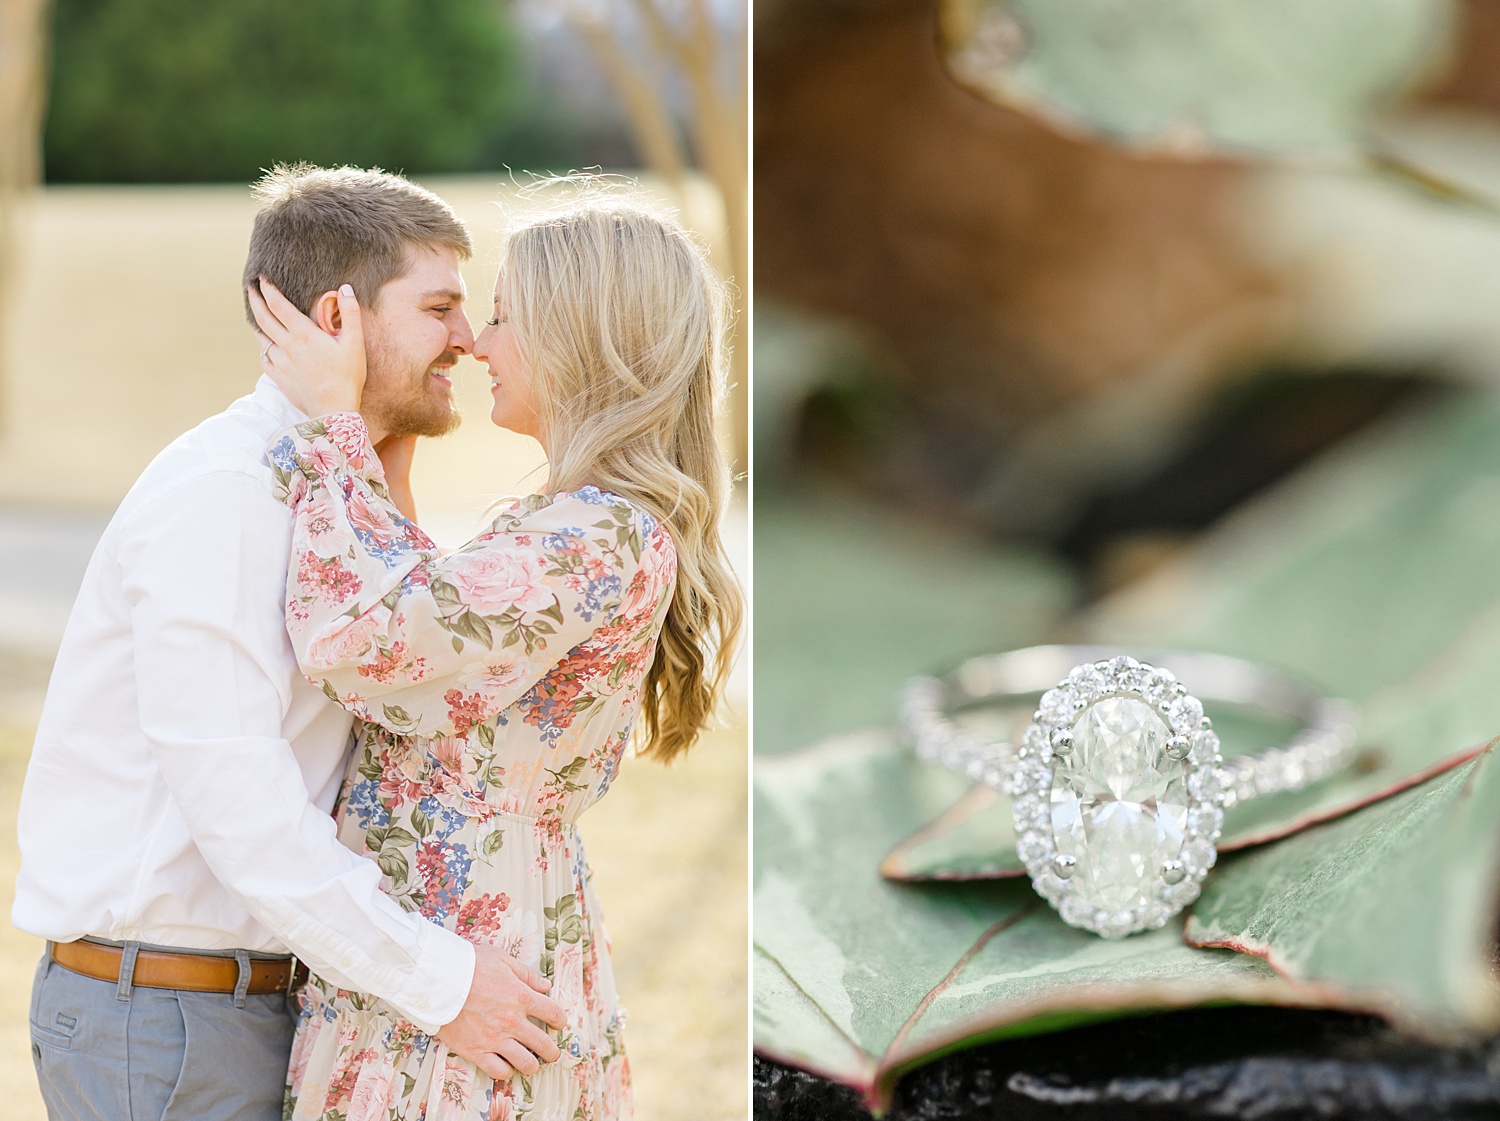 Engagement ring on green leaf